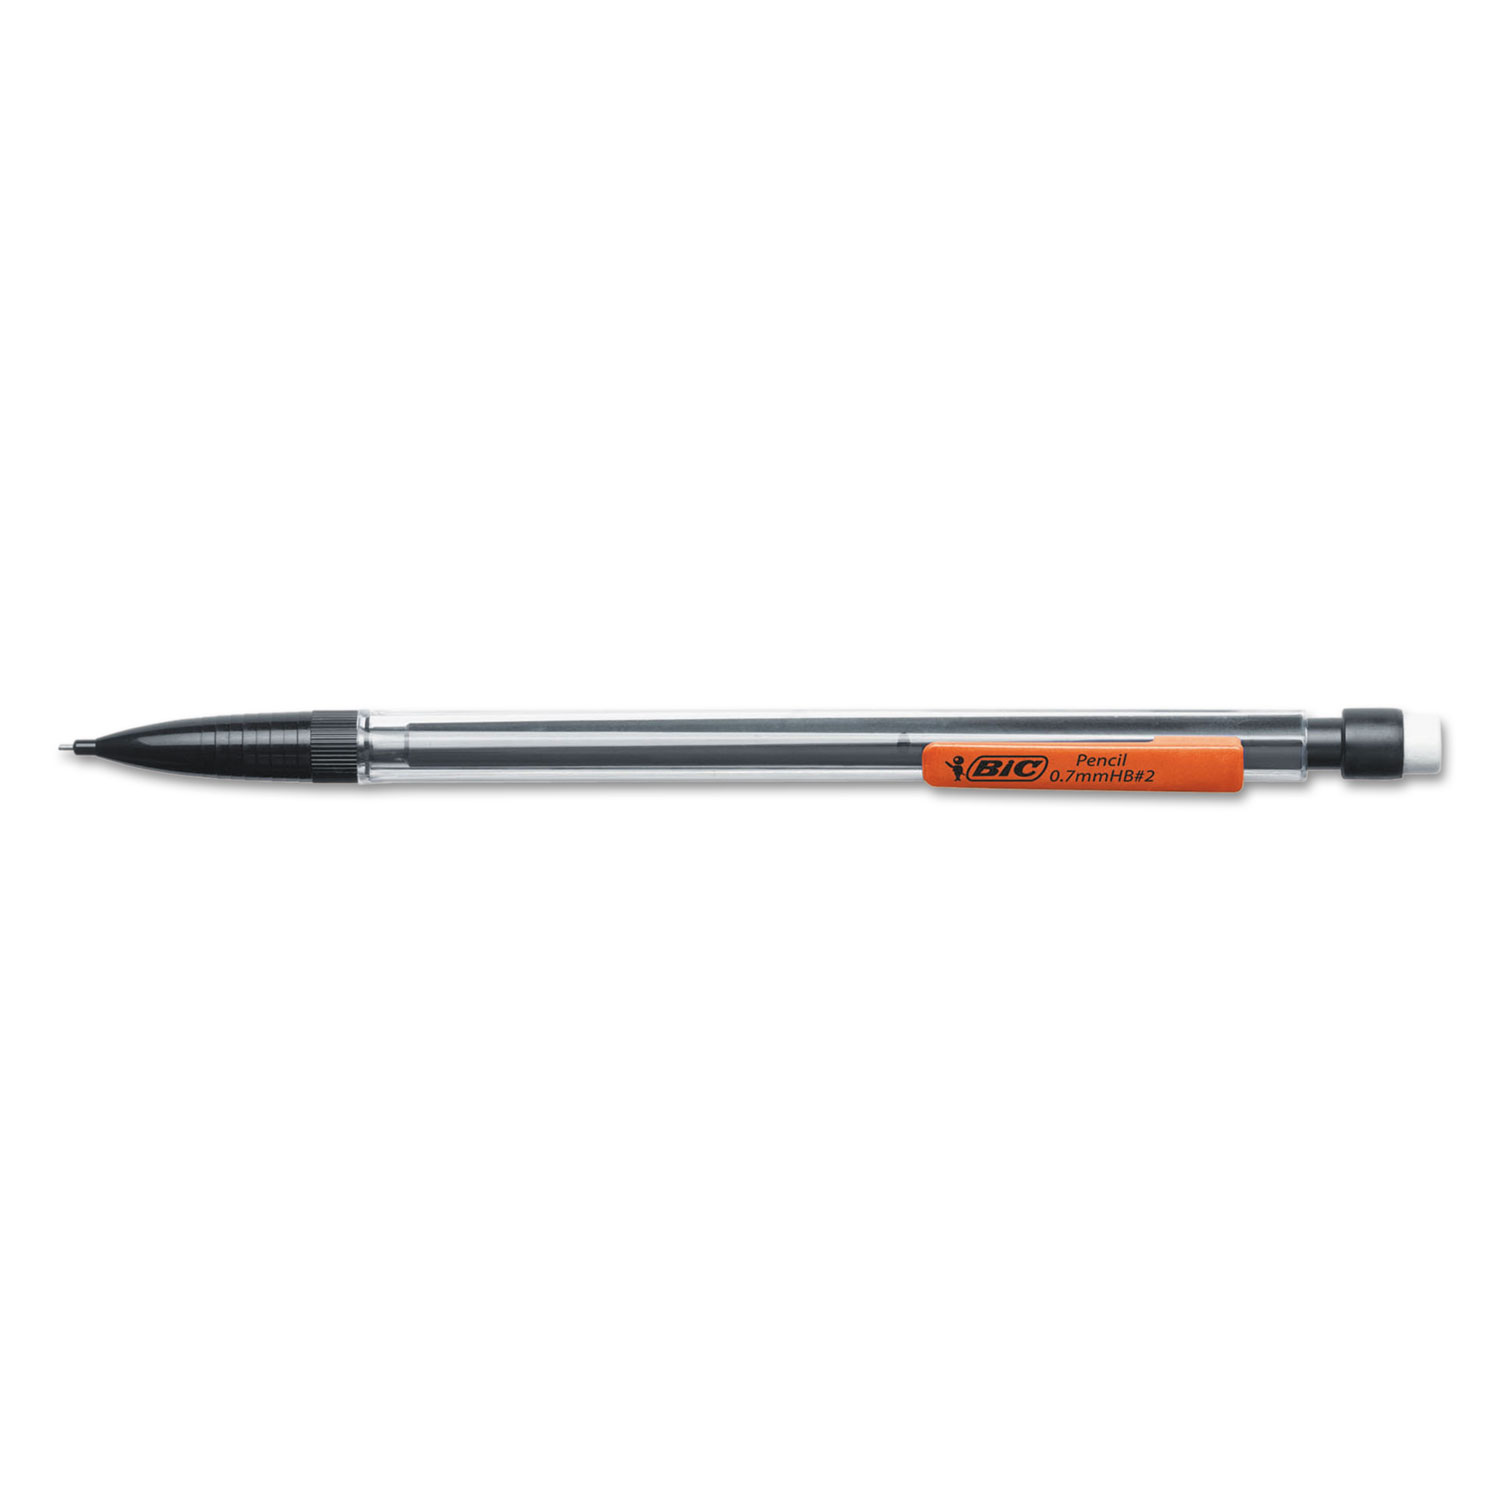 Xtra Smooth Mechanical Pencil, 0.7mm, Clear Barrel, Dozen